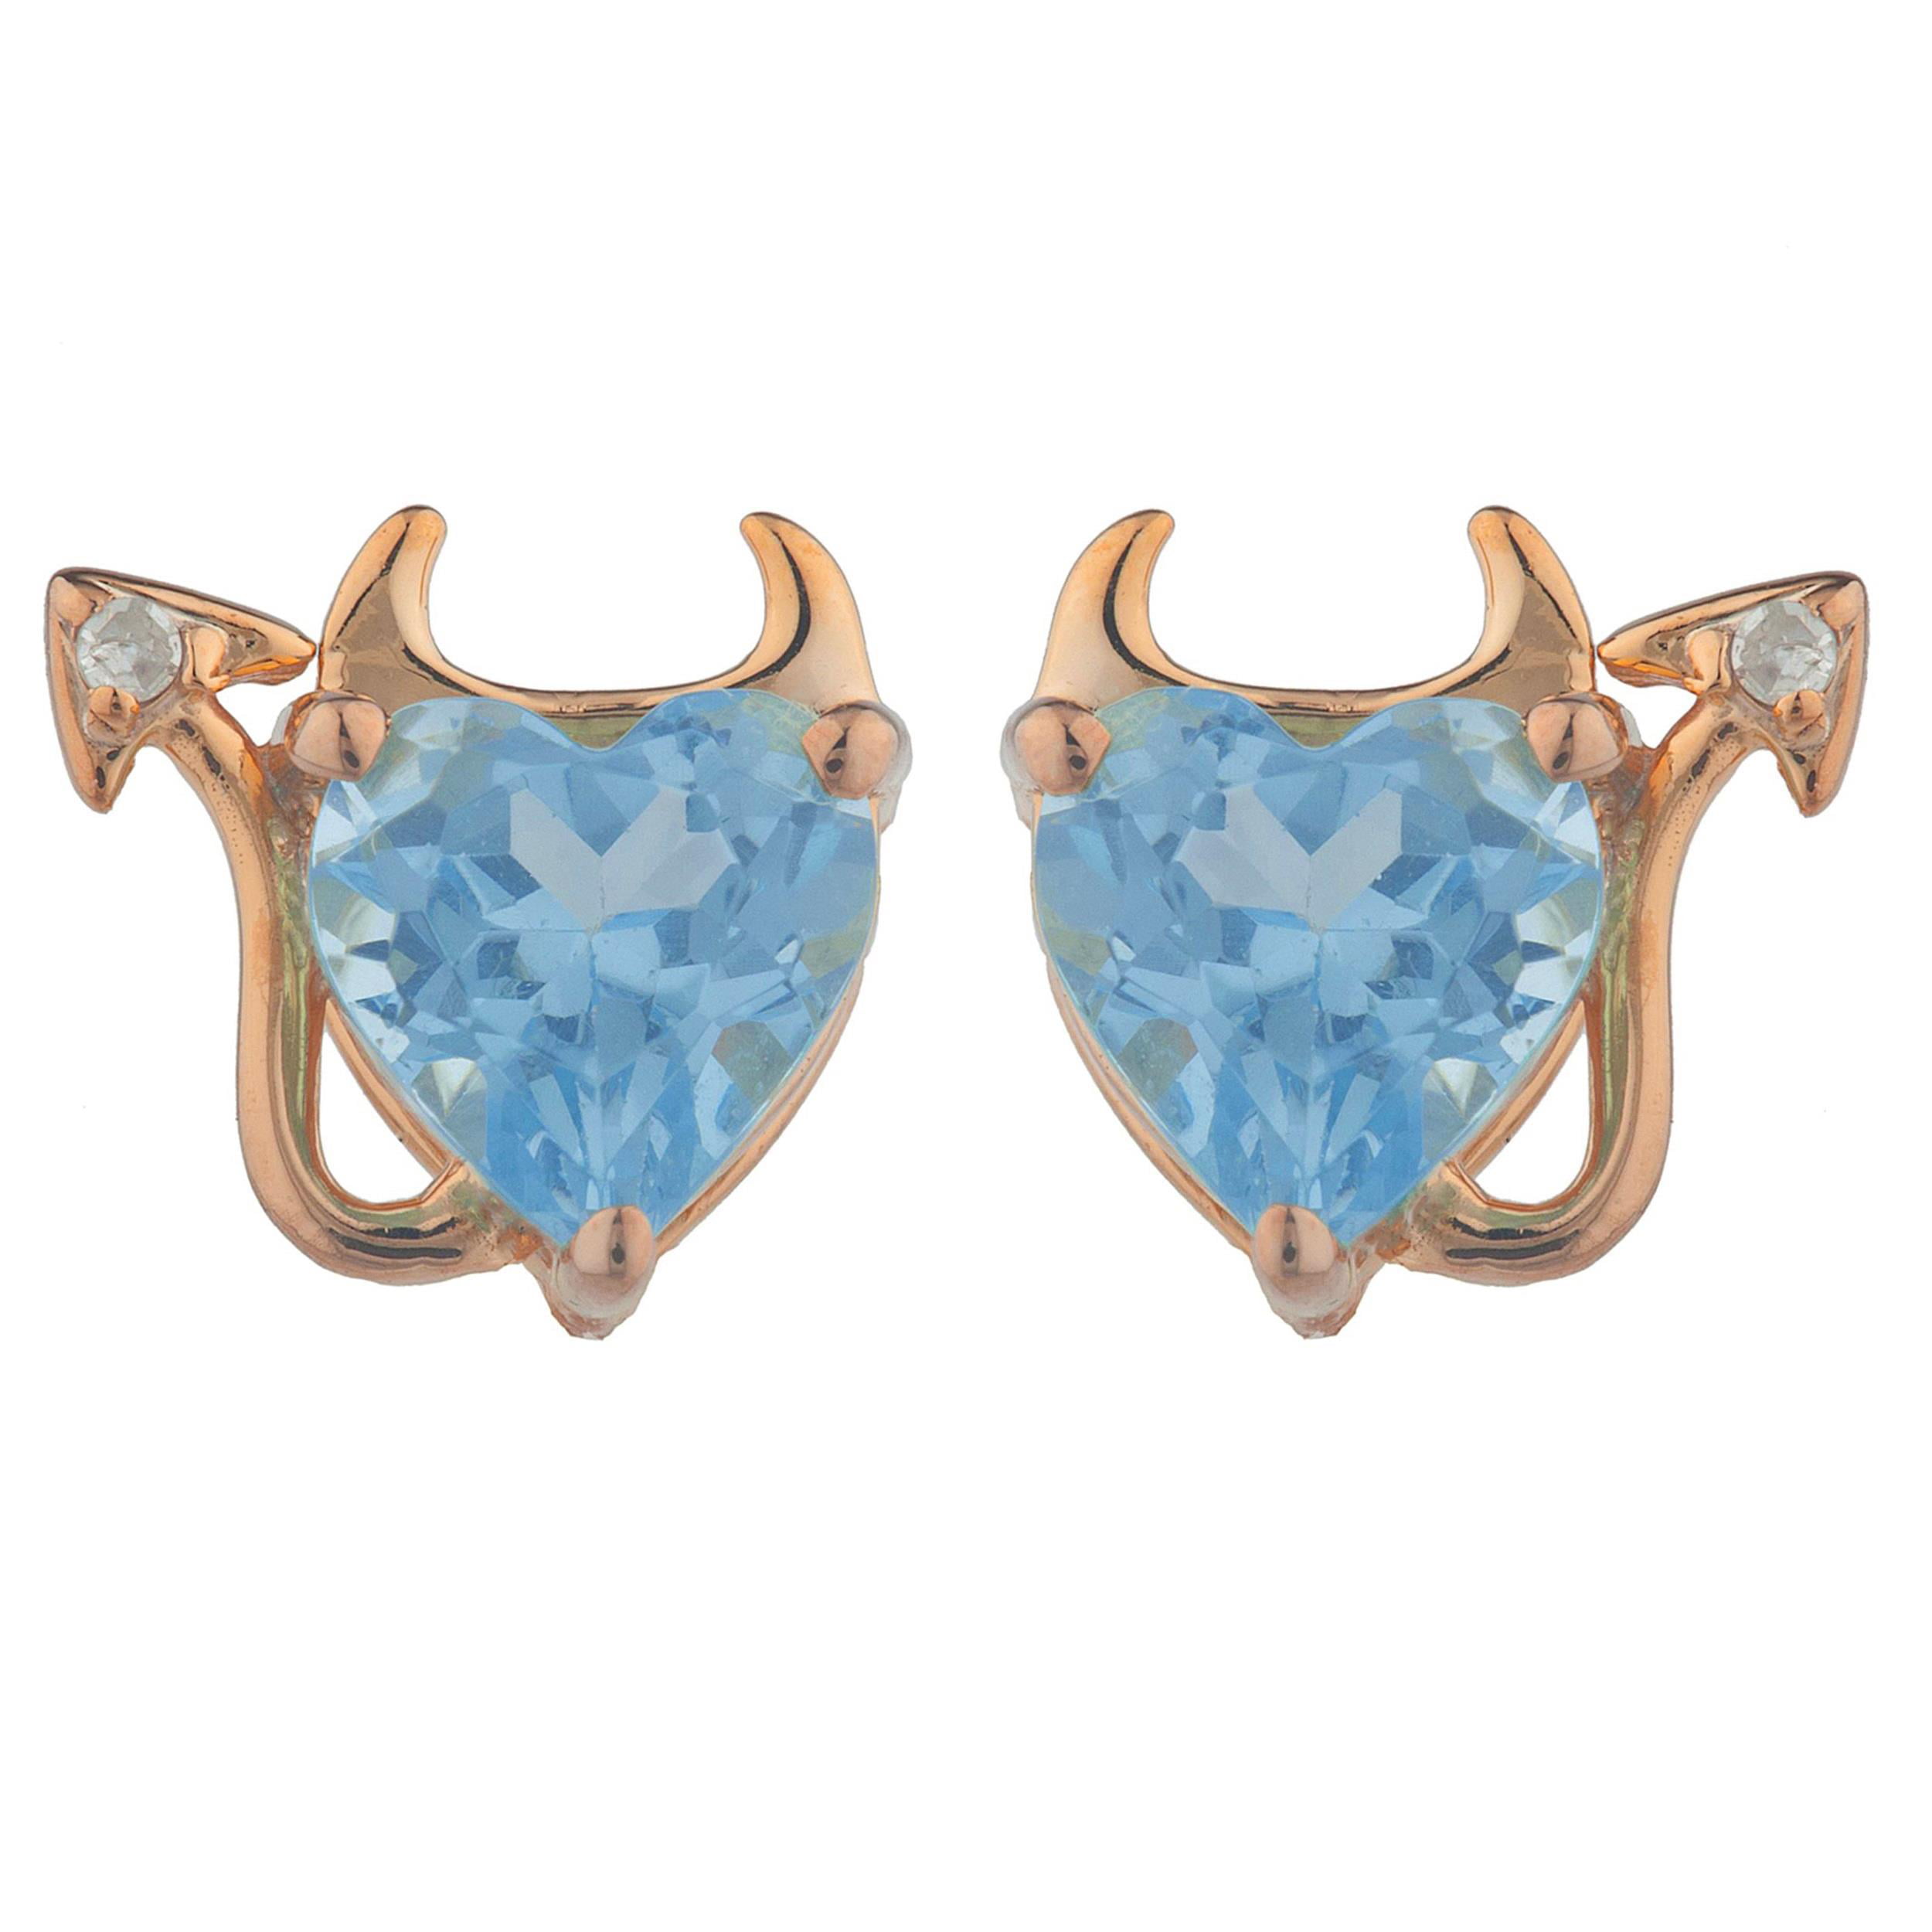 Simulated London Blue Topaz & Diamond Devil Heart Stud Earrings 14Kt Rose Gold Plated Over .925 Sterling Silver 